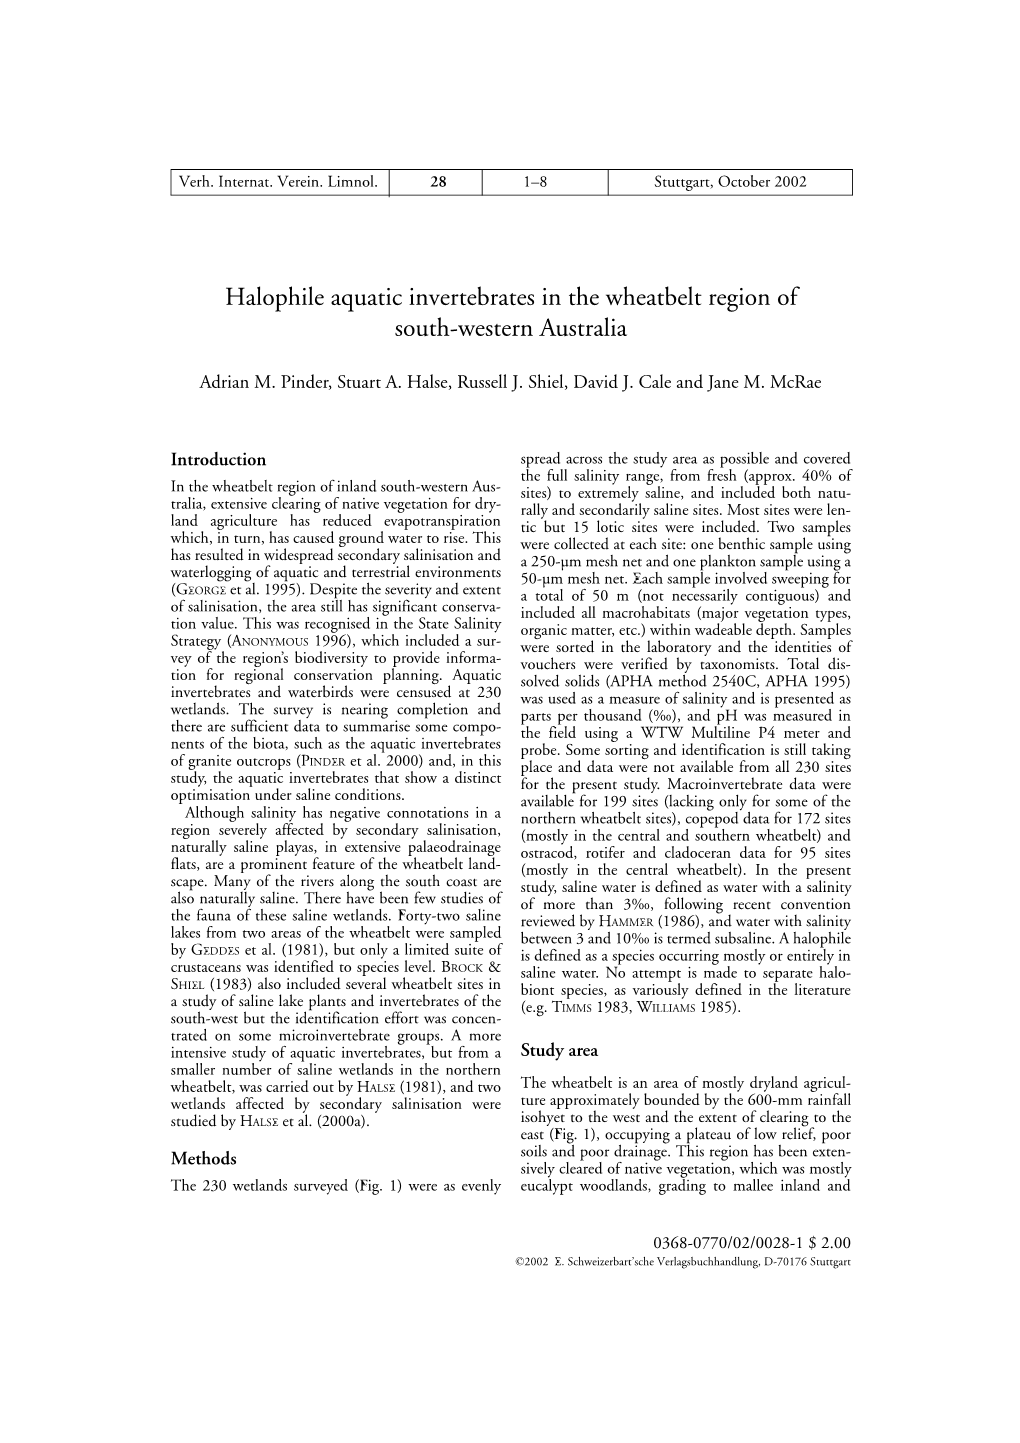 Halophile Aquatic Invertebrates in the Wheatbelt Region of South-Western Australia